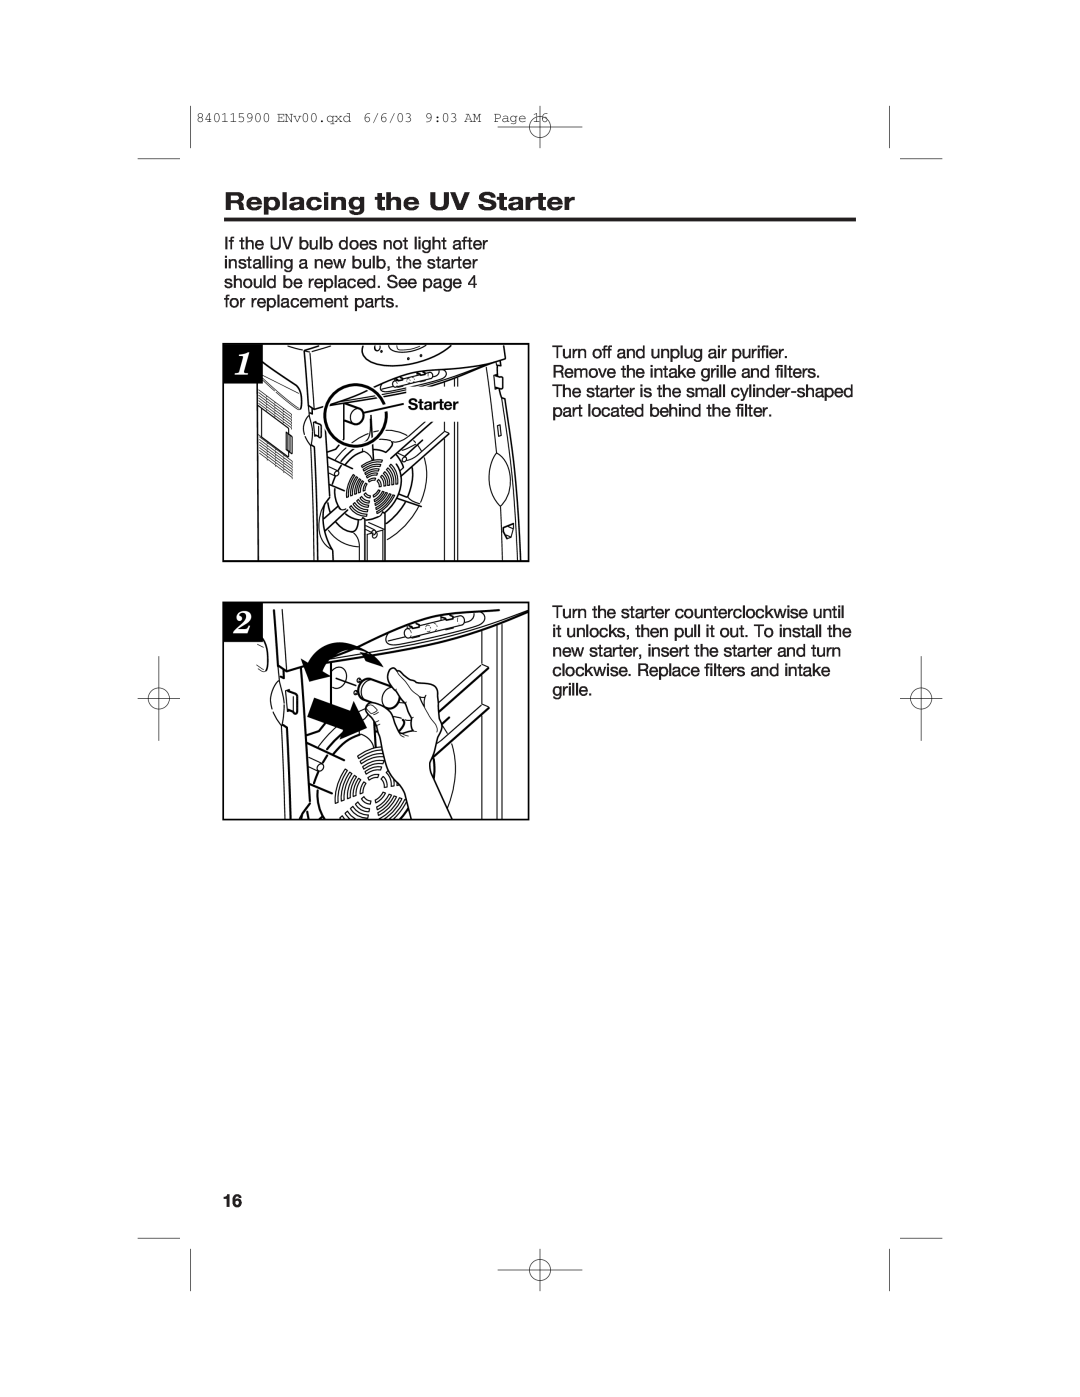 Hamilton Beach 840115900 manual Replacing the UV Starter 